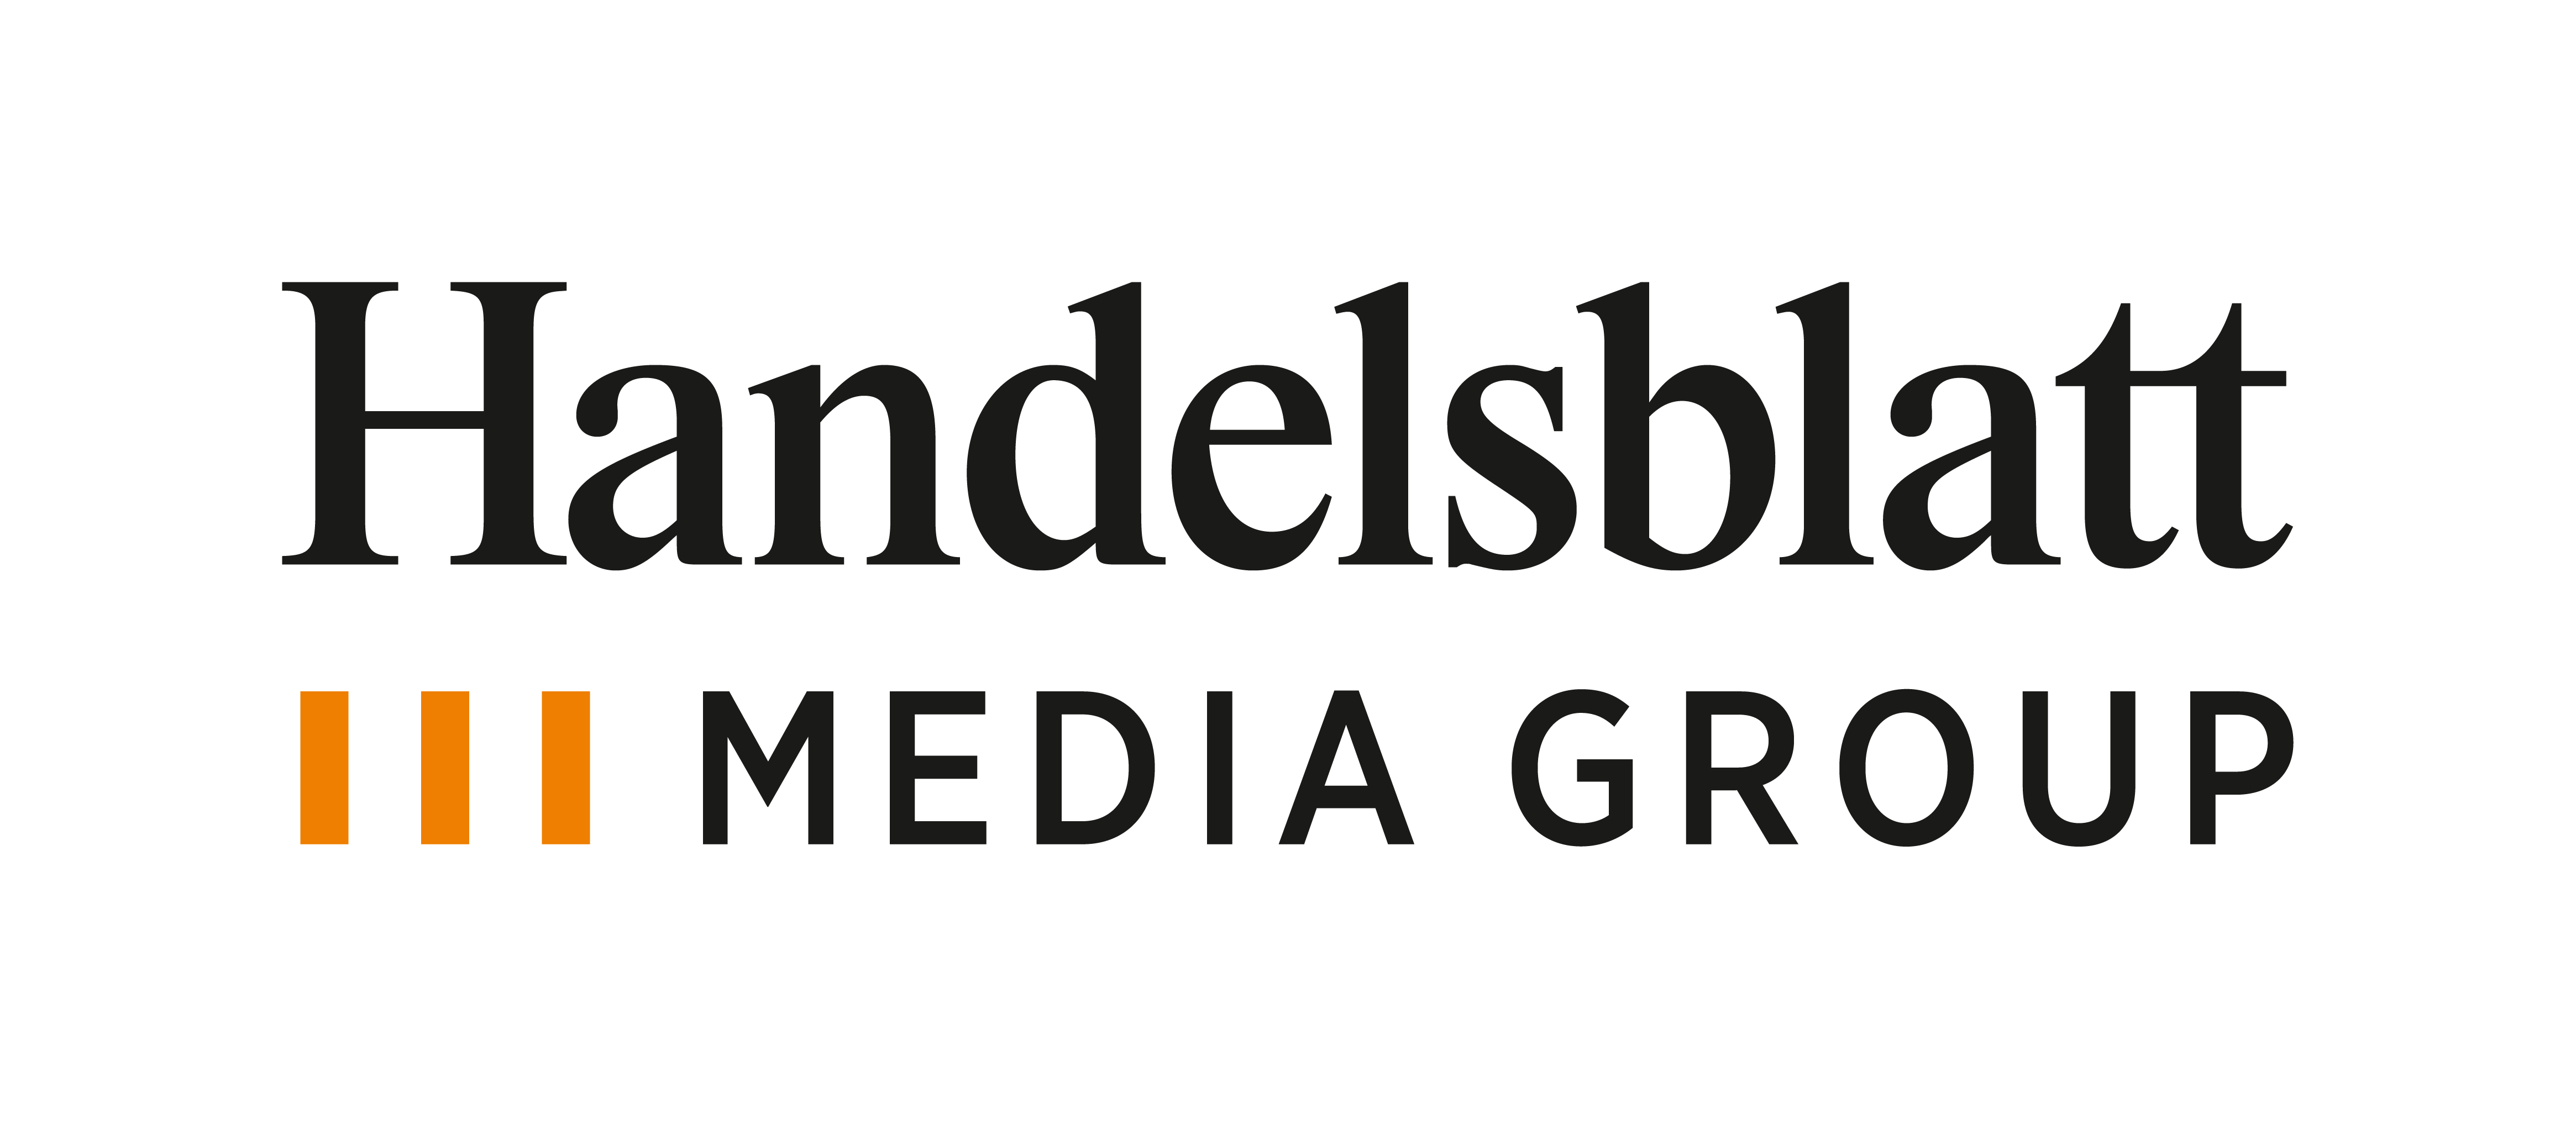 Handelsblatt Media Group GmbH und Co. KG